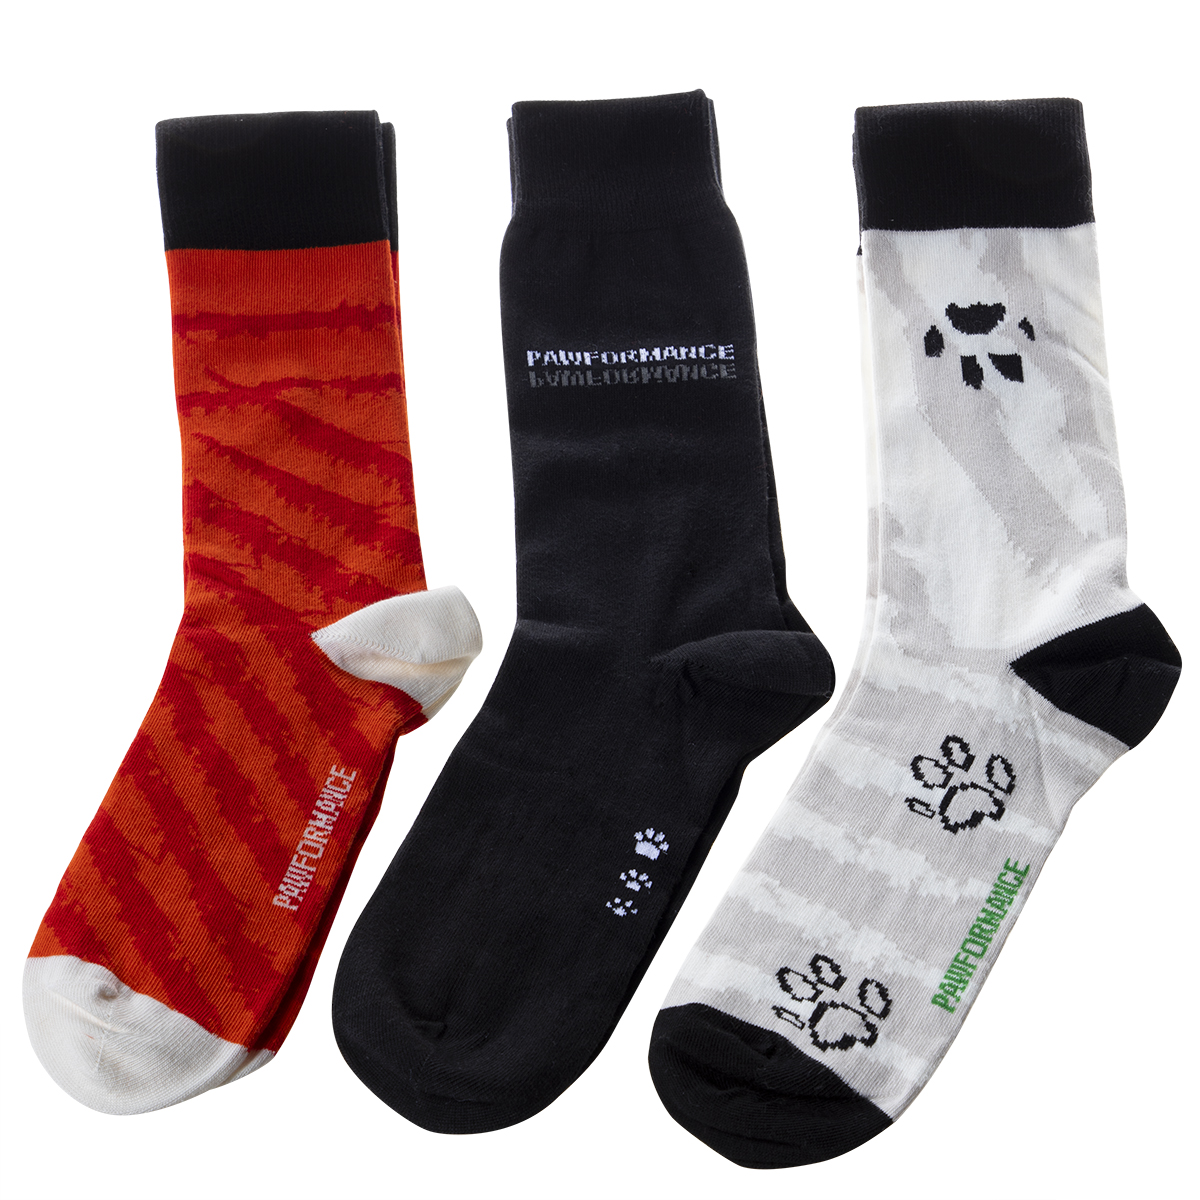 Biggdesign Mens Cotton 3-Pair Pack Patterned Socks,  Ankle High Dress and Casual Socks For Men, Cool Crew Bulk Socks, 8-12 Size